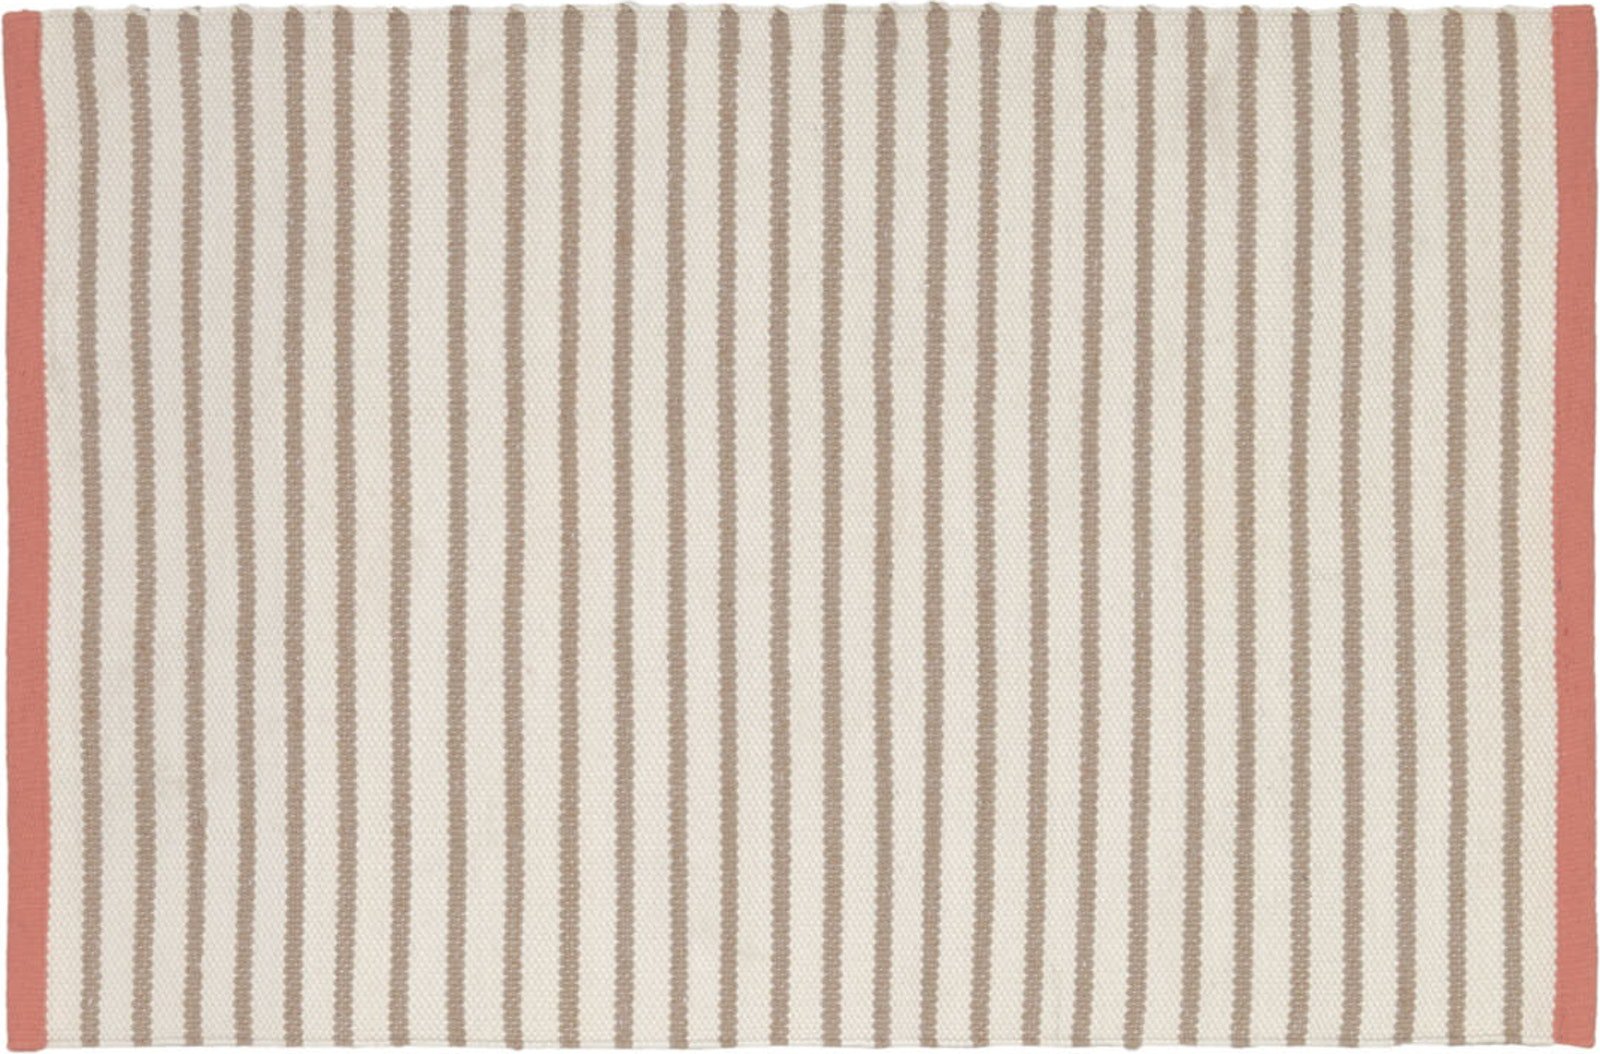 Catiana, Tæppe, moderne, nordisk, stof by LaForma (H: 1 cm. B: 60 cm. L: 90 cm., Brun)